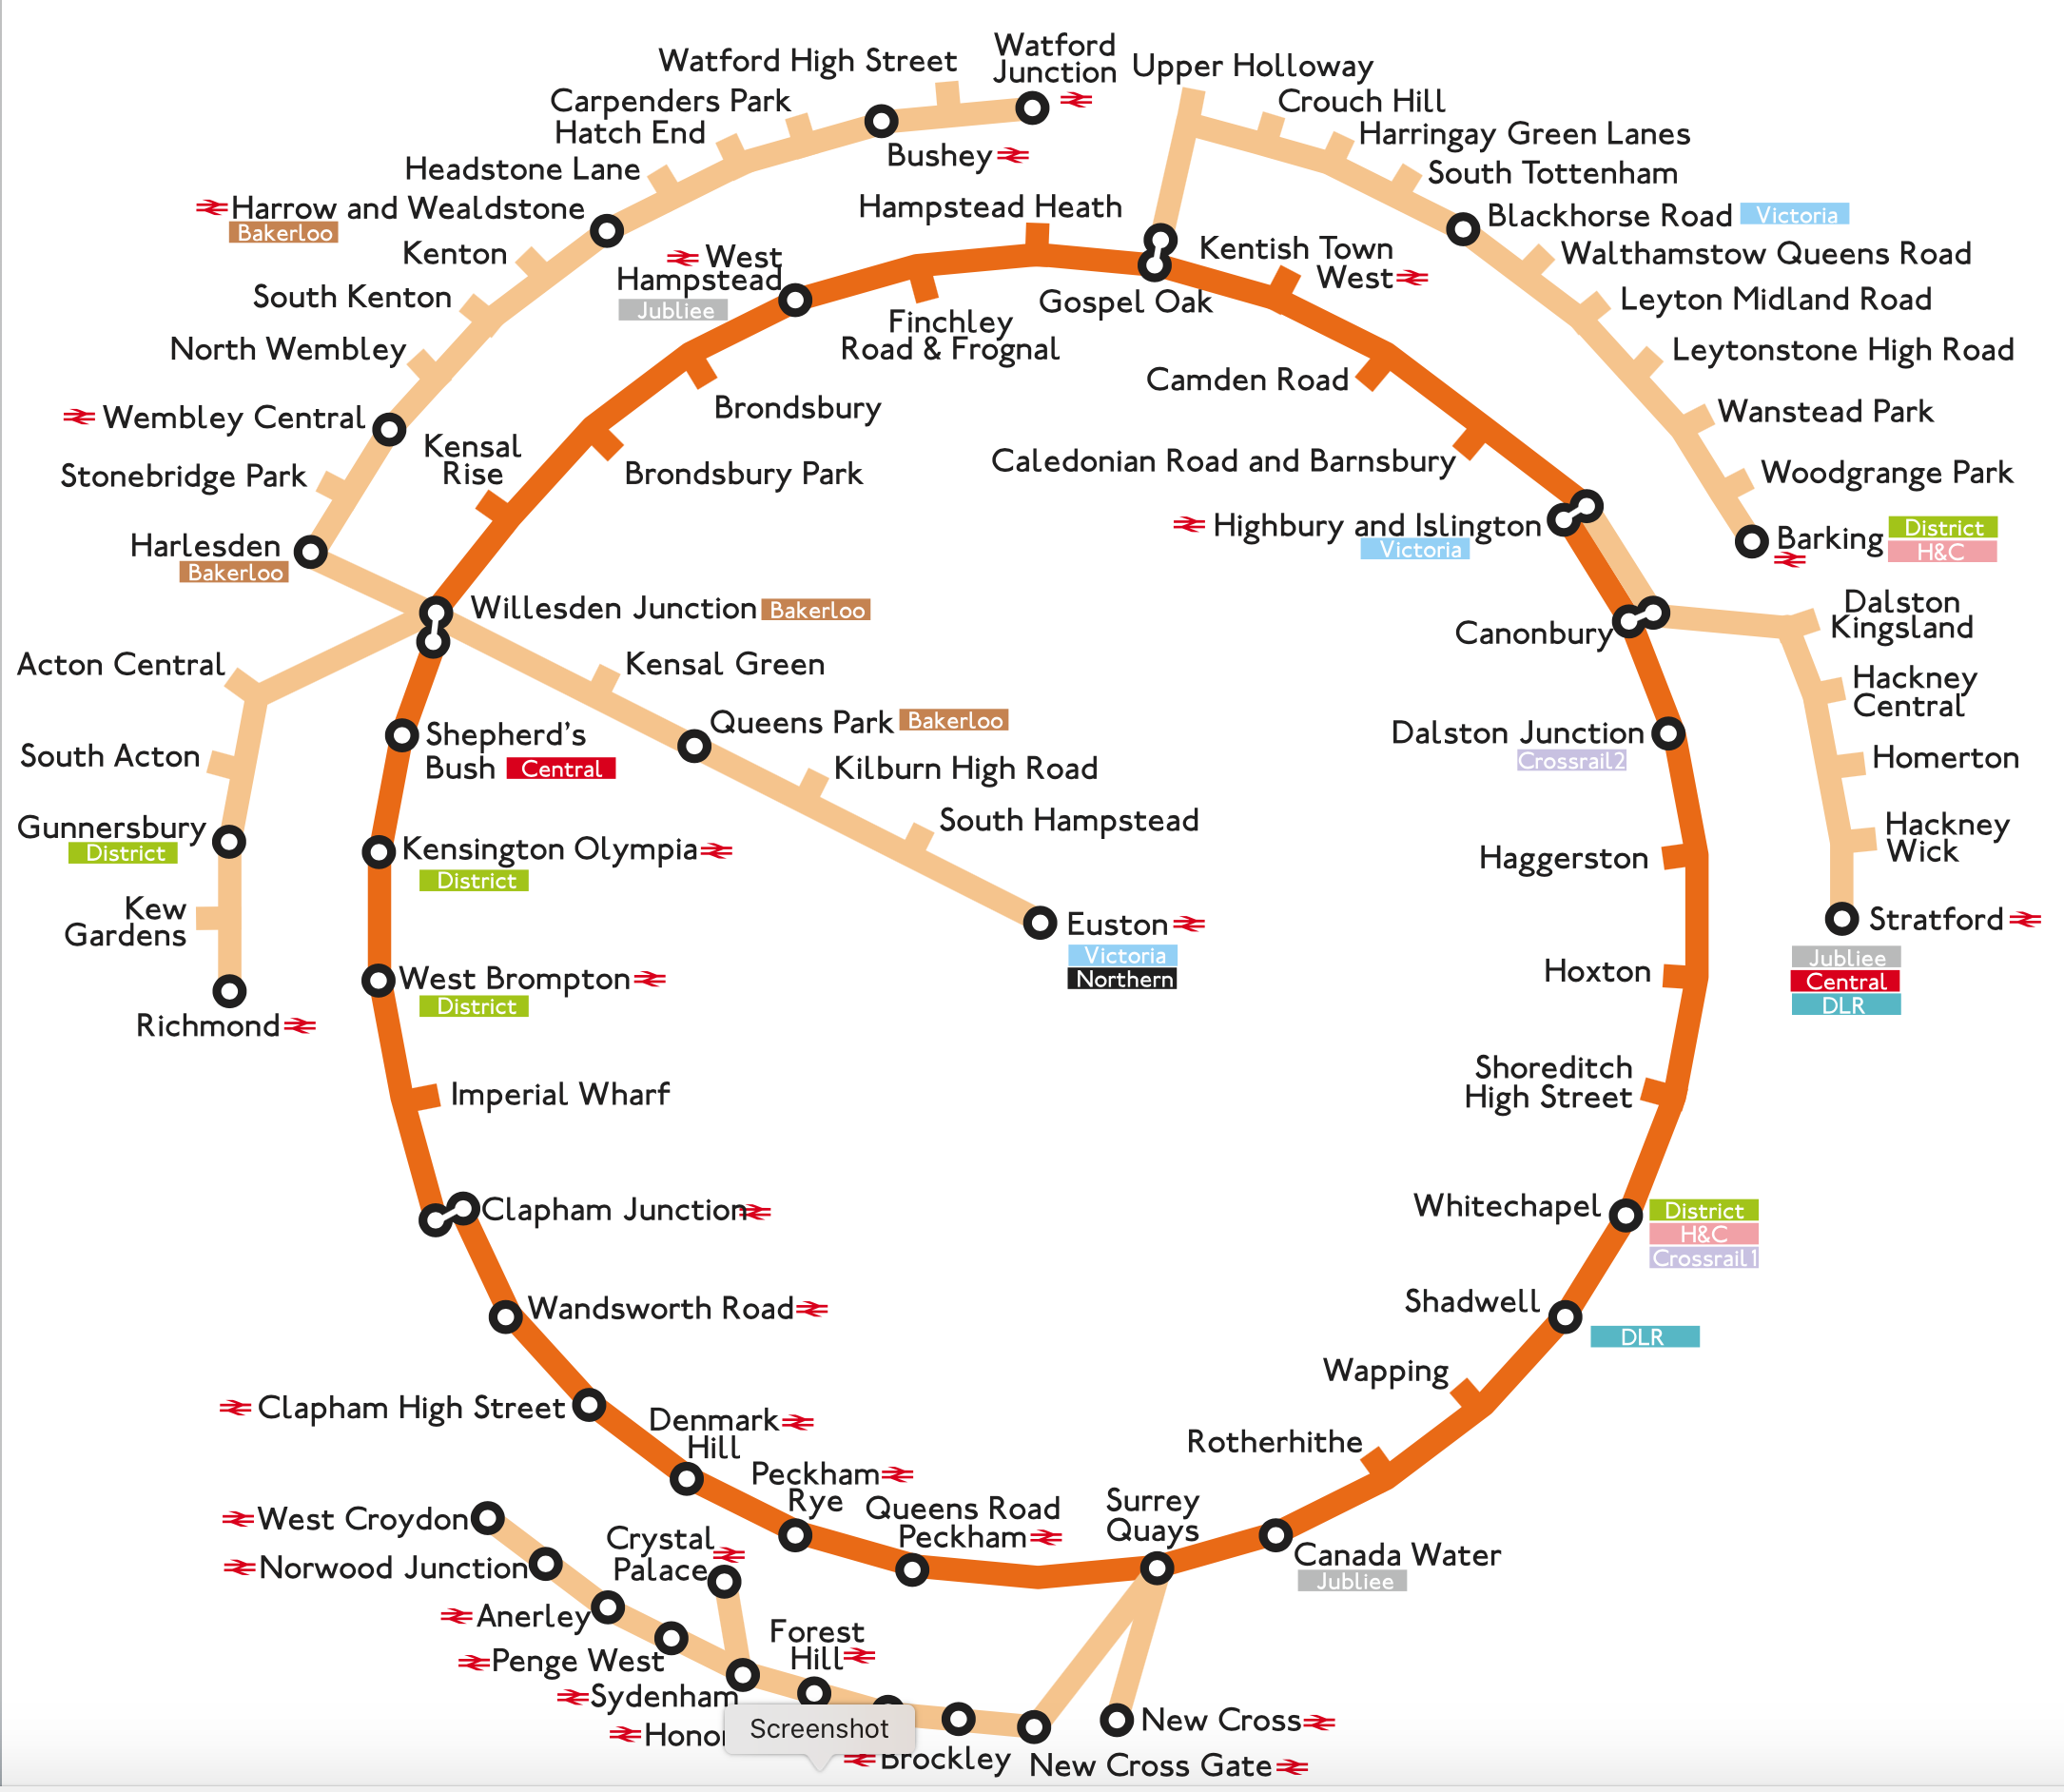 London Overground train / rail maps